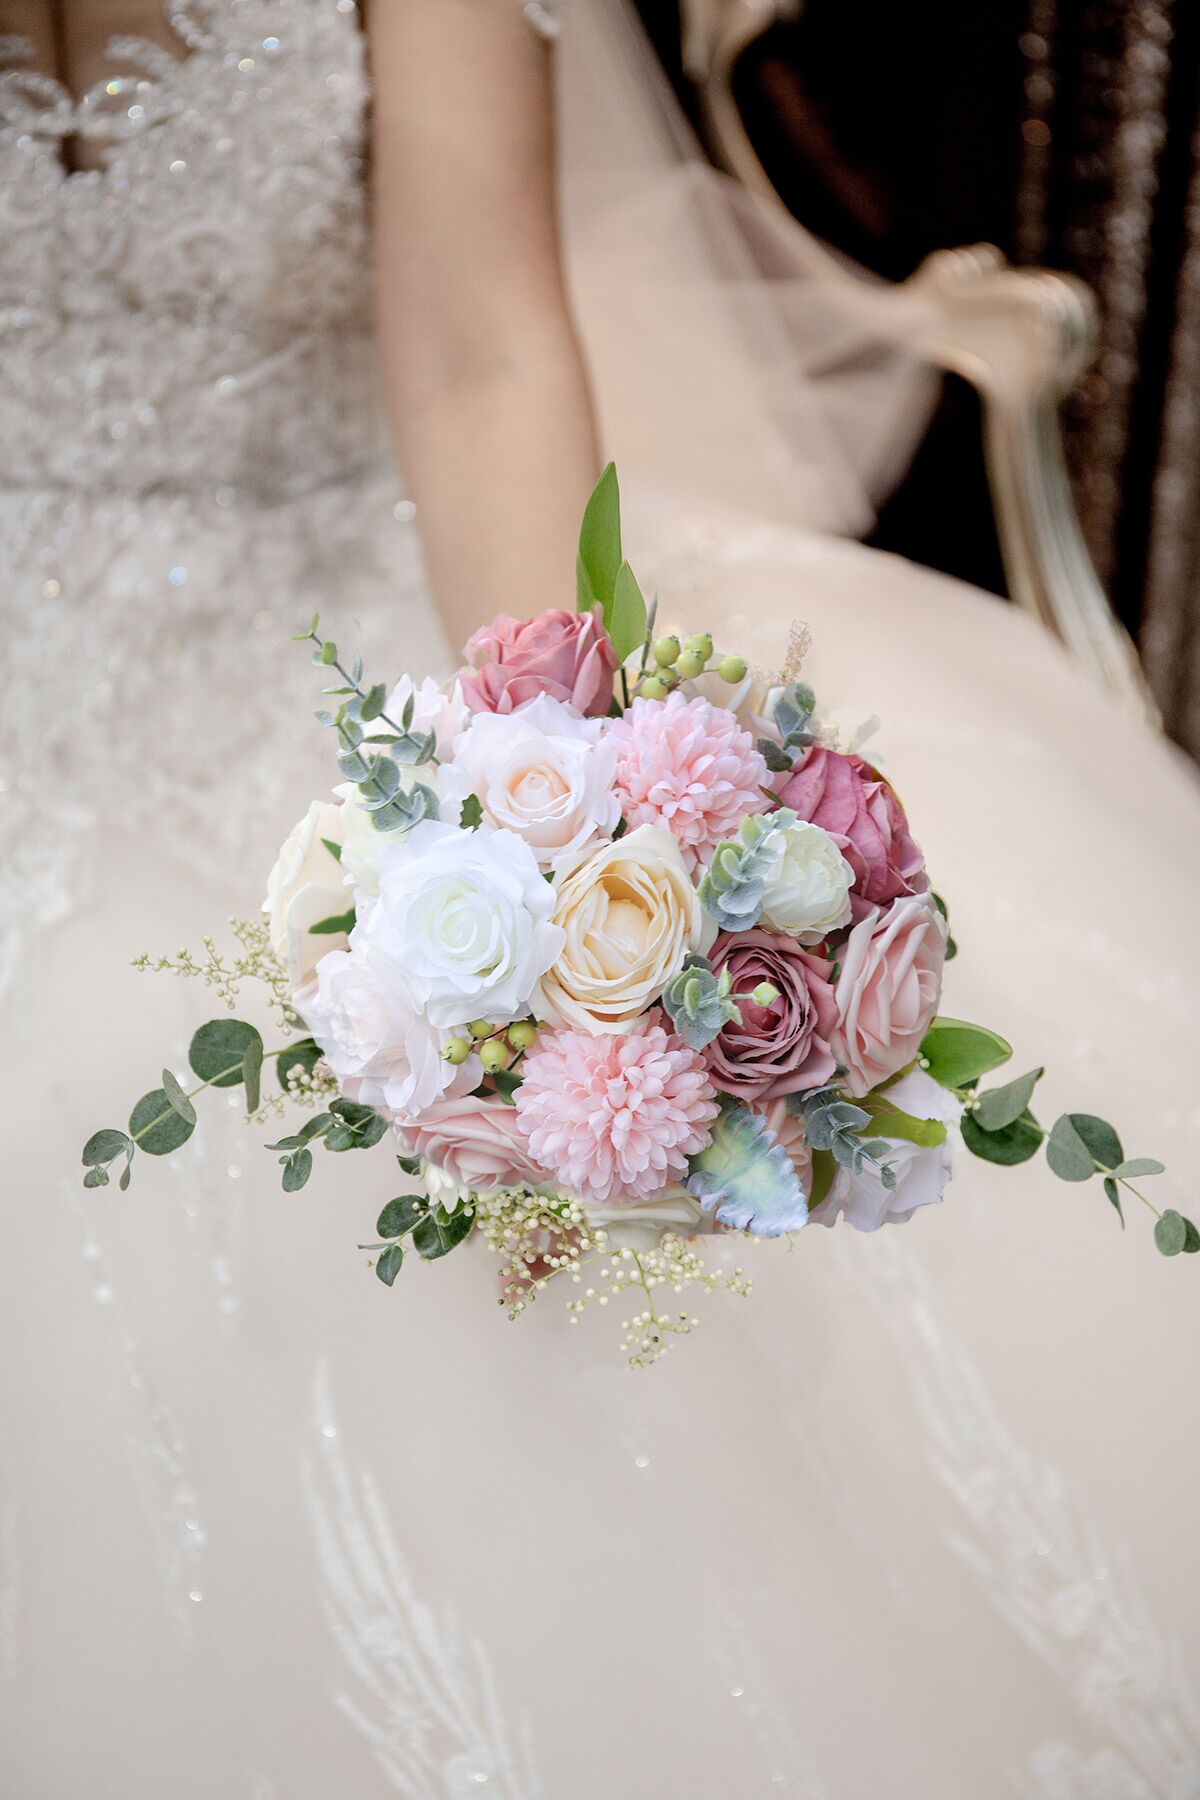 Artificial Flowers - Wedding Flower Box Set - DIY Bridal Bouquet, Centerpieces, Aisle Flower Decor - Dusty Pink & Blush Pink